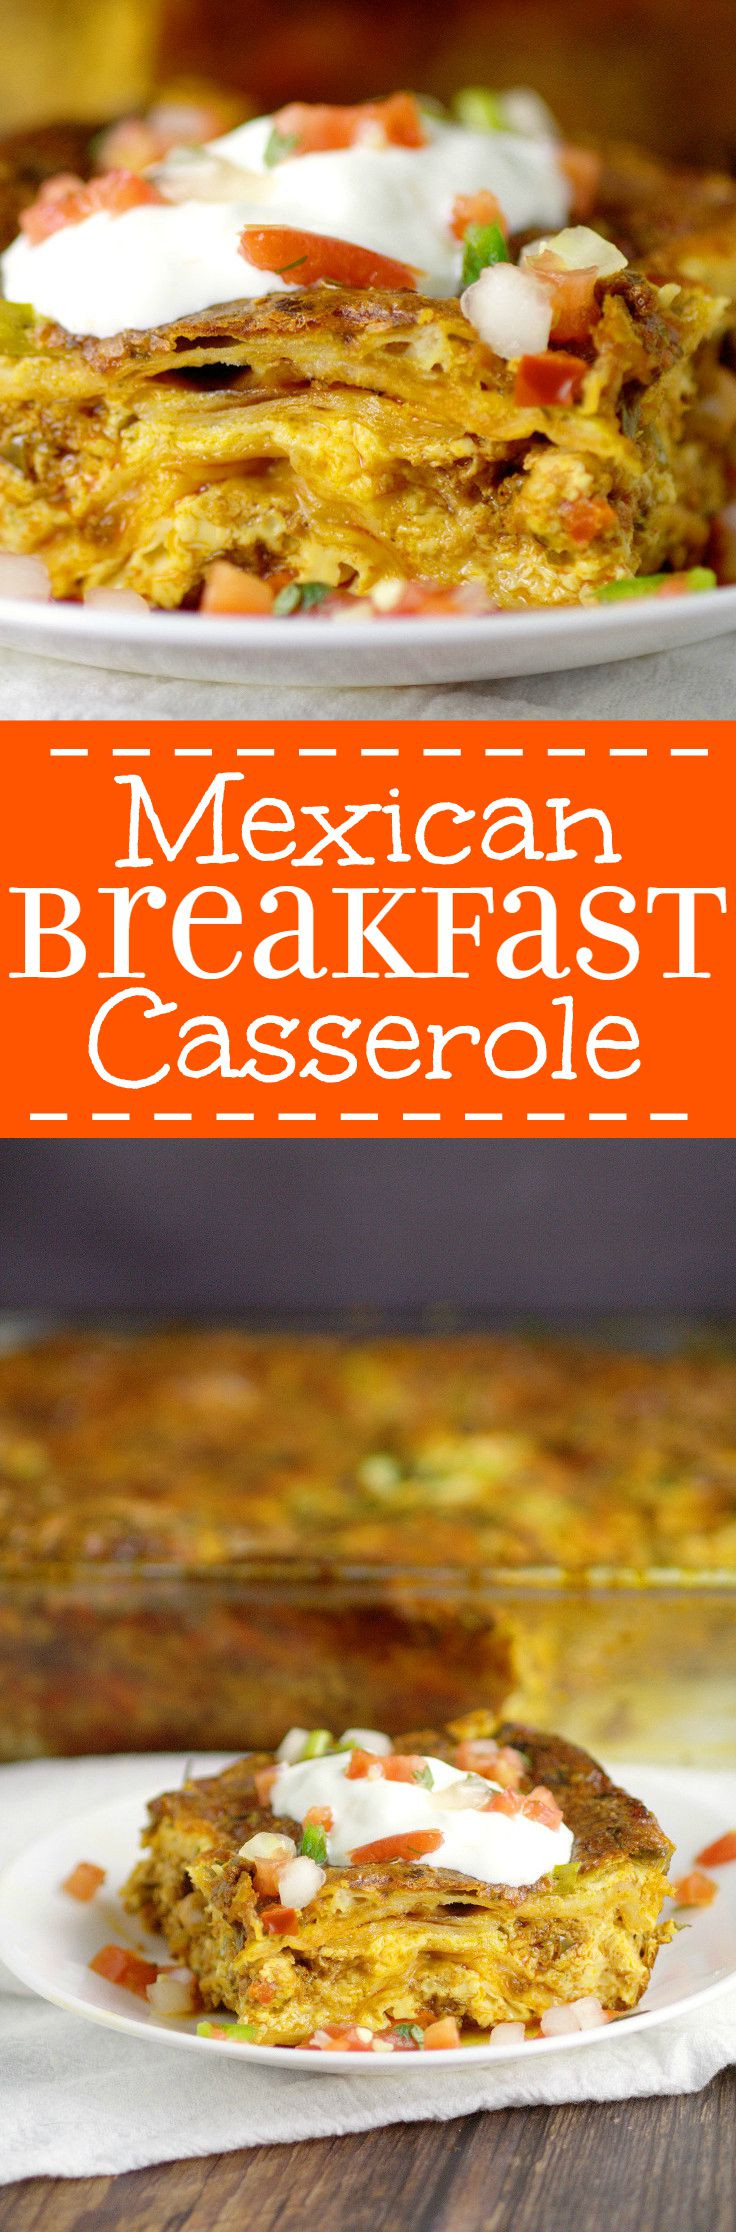 Mexican Egg Casserole
 Mexican Breakfast Casserole